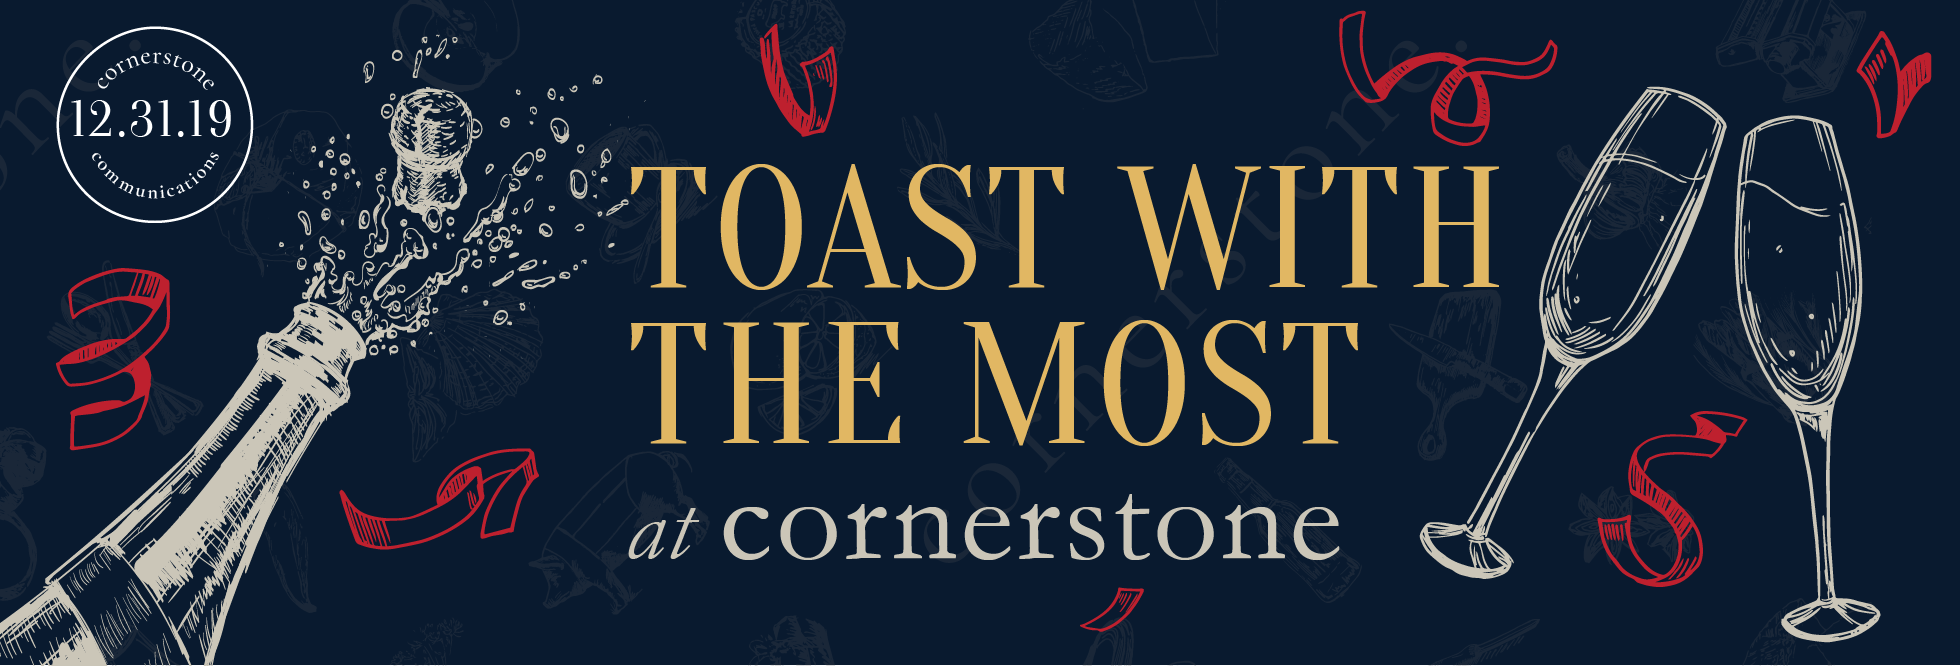 the latest from cornerstone. | Cornerstone